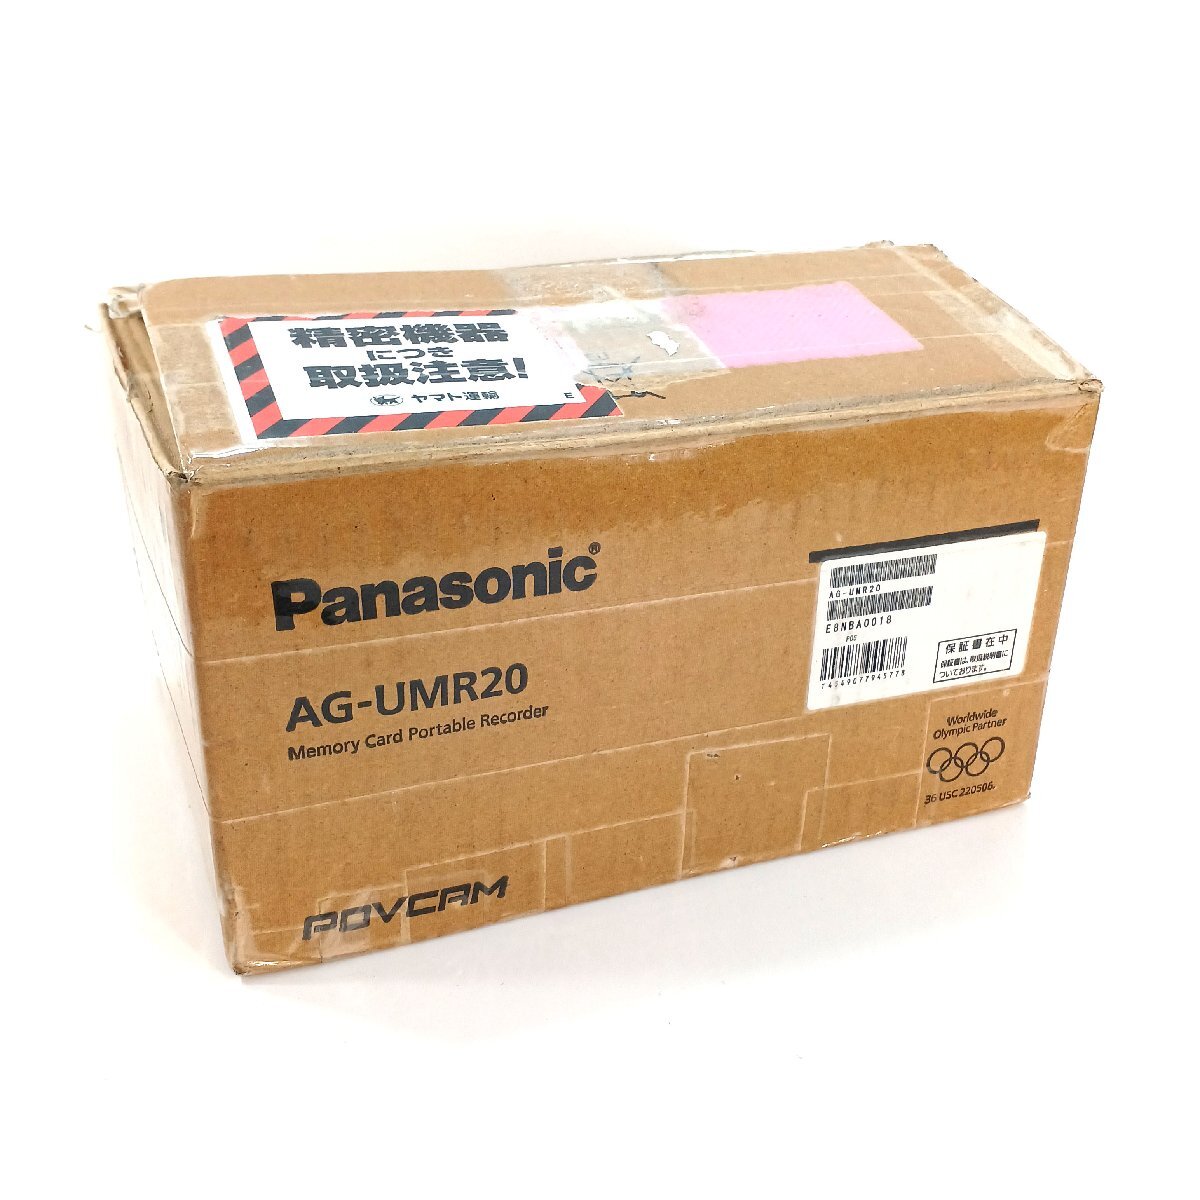  Panasonic AG-UMR20 4K correspondence memory card portable recorder business use electrification has confirmed Panasonic used *